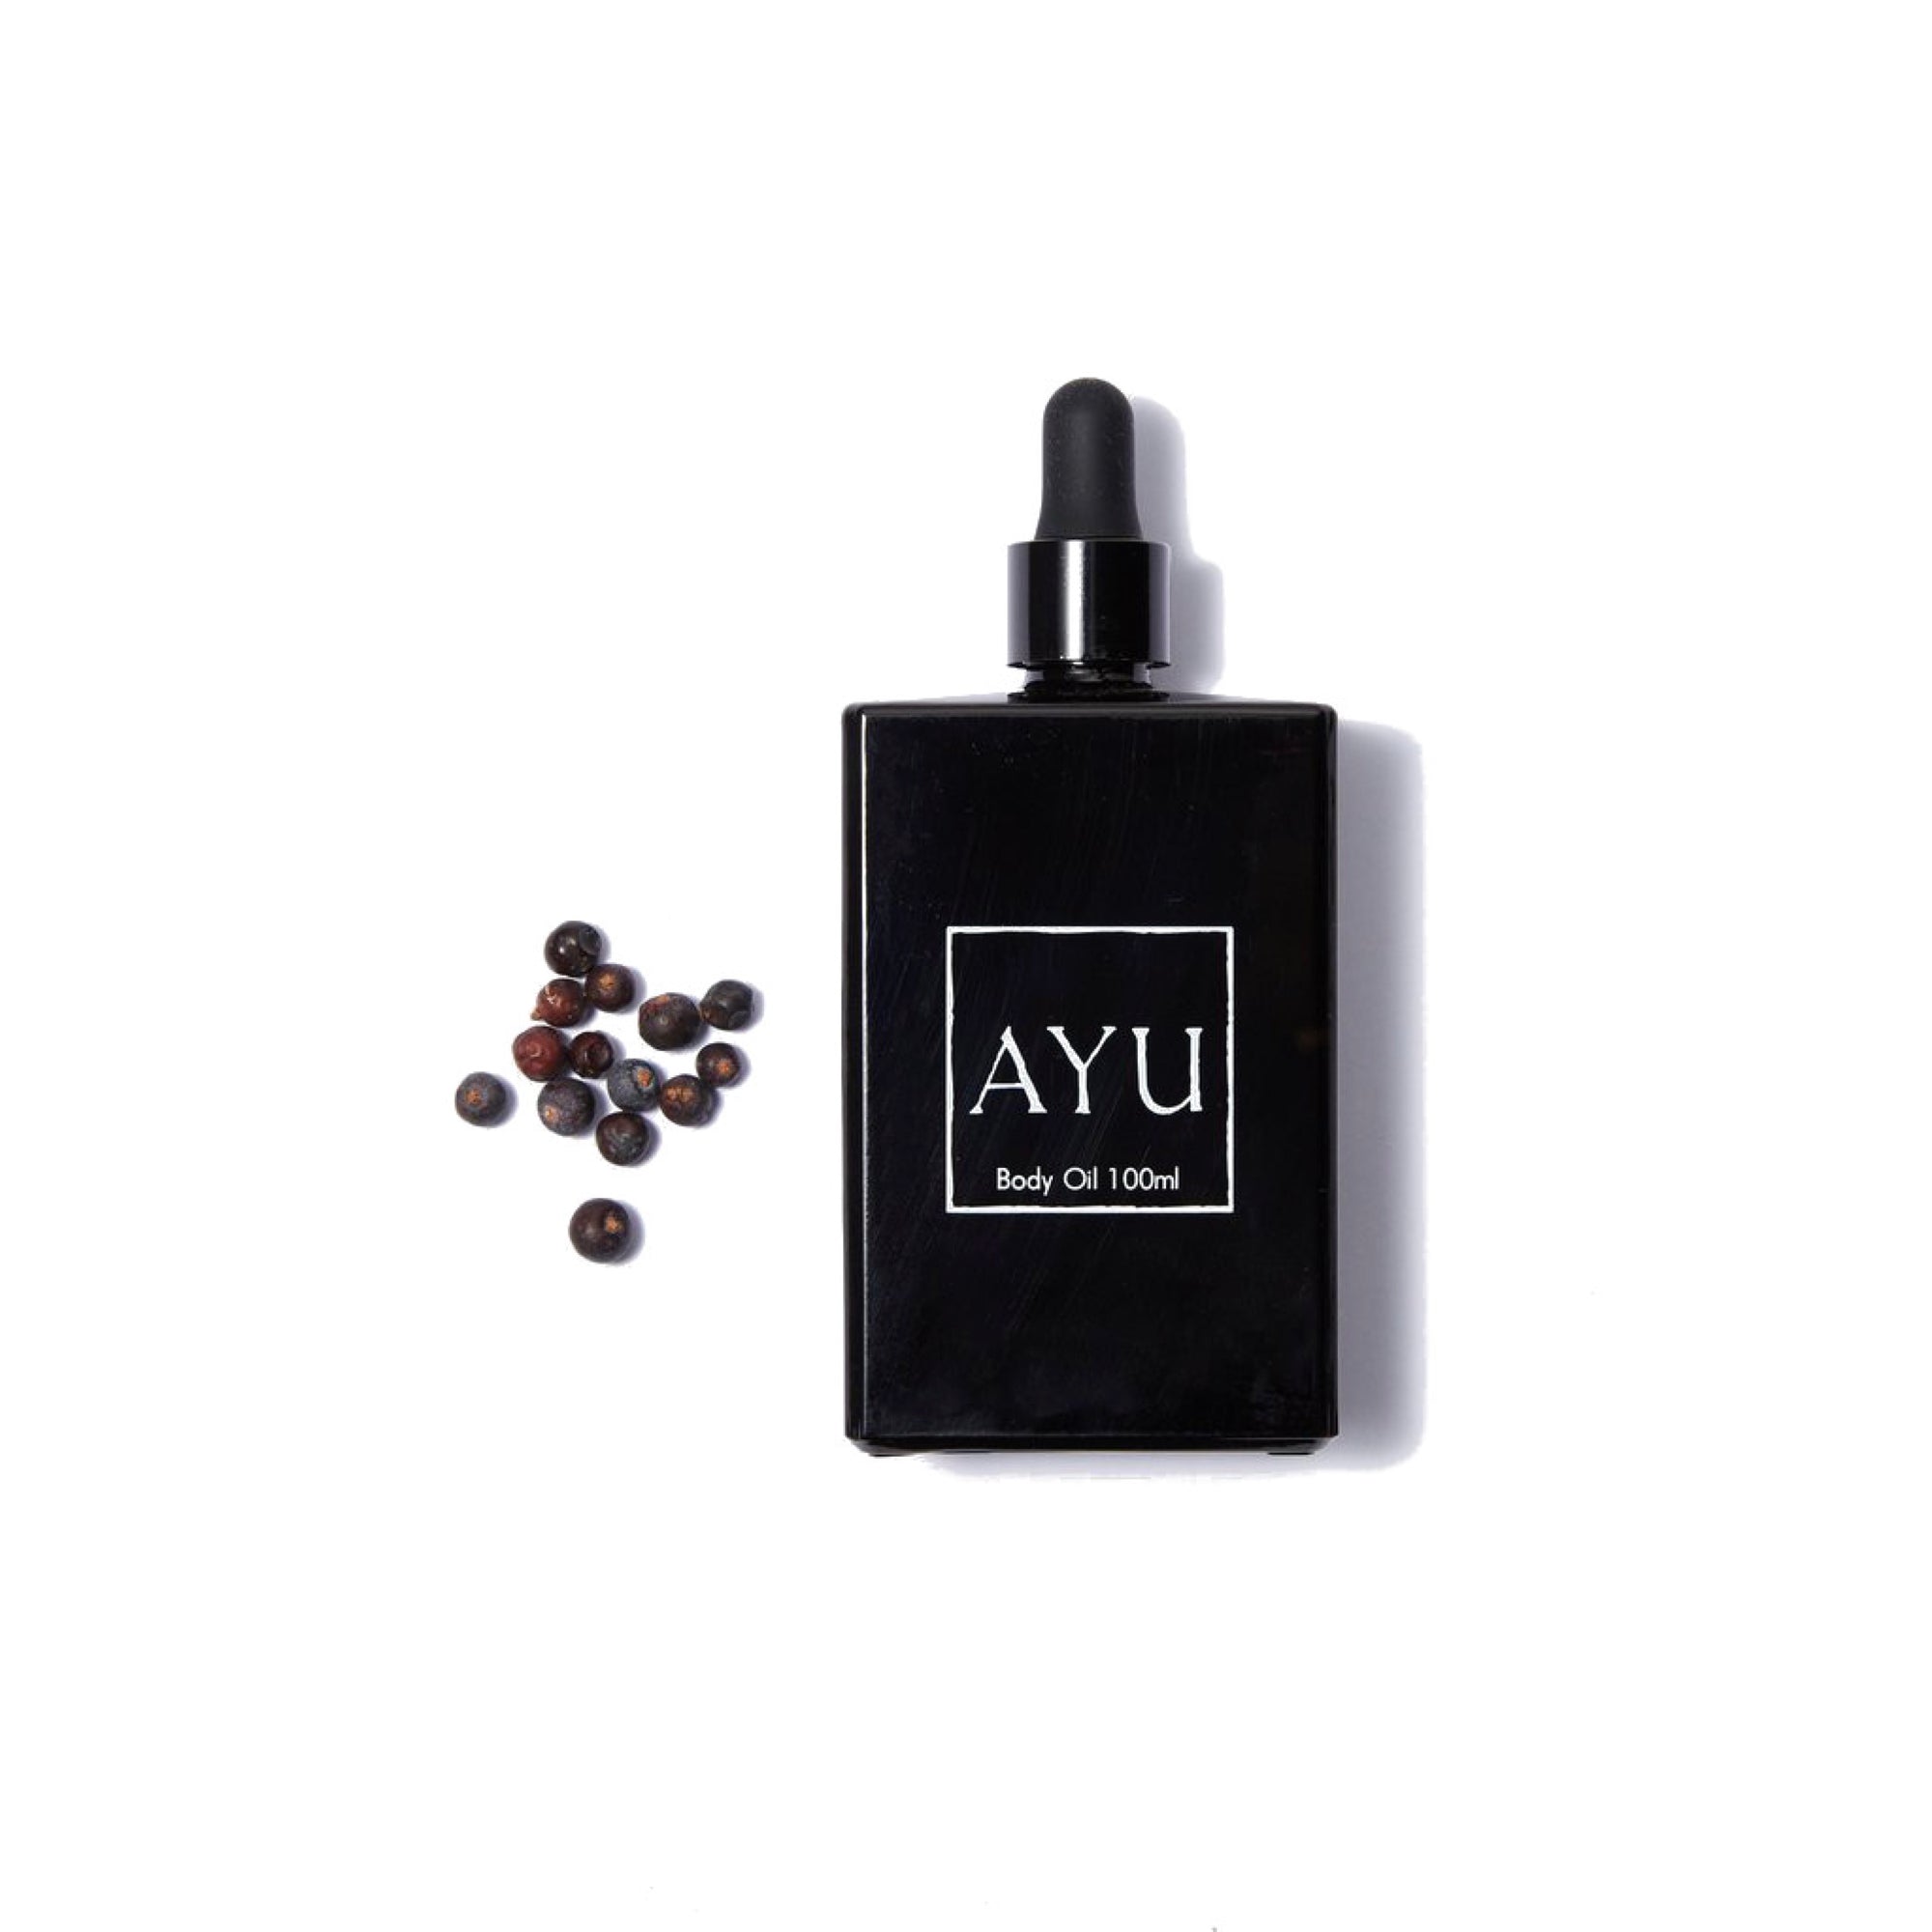 AYU Body Oil 100ml- Juniper Berry, Petitgrain & Vetiver